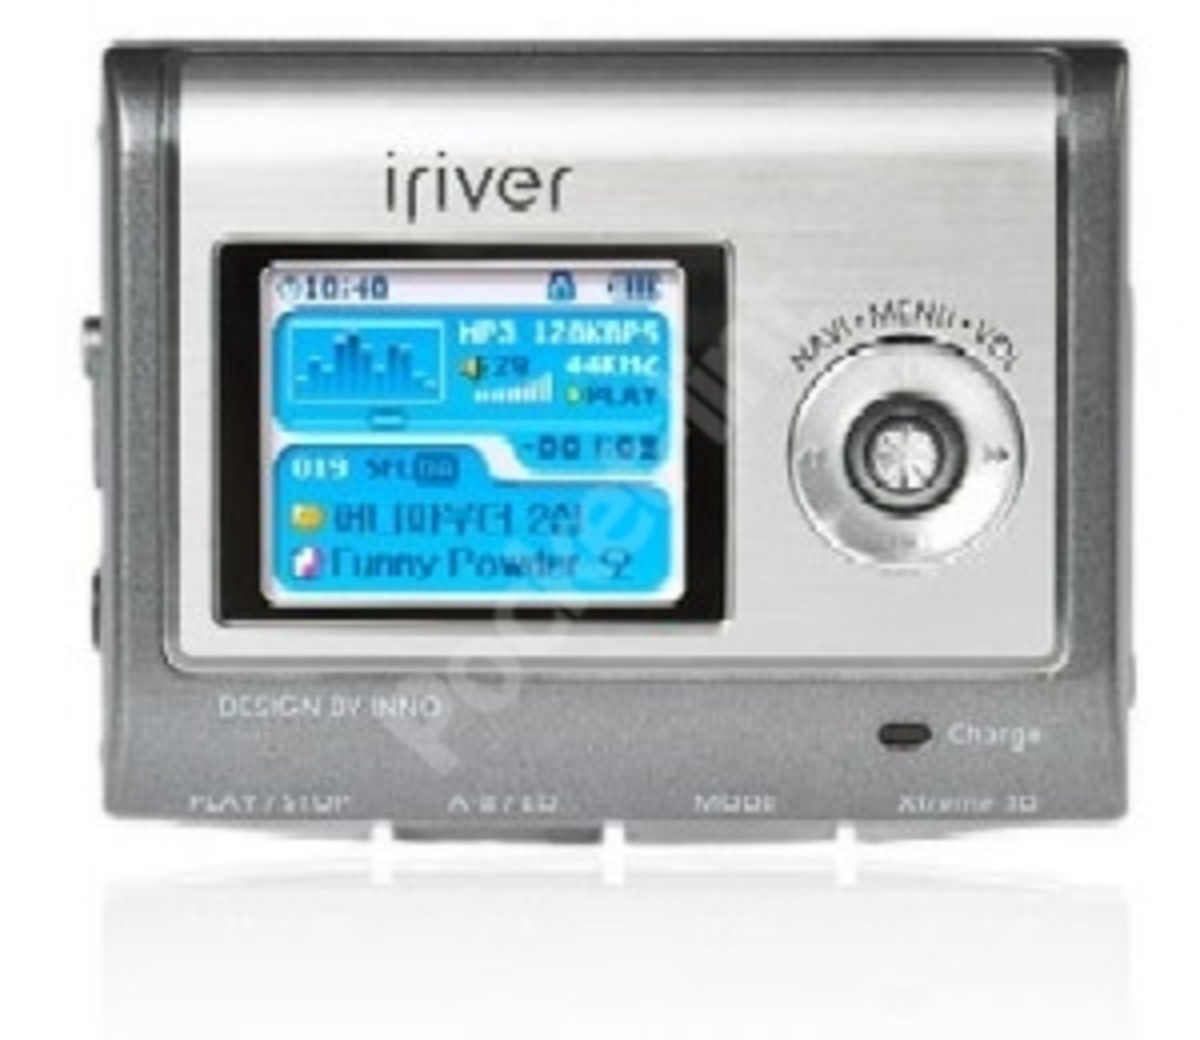 Iriver mp3 driver